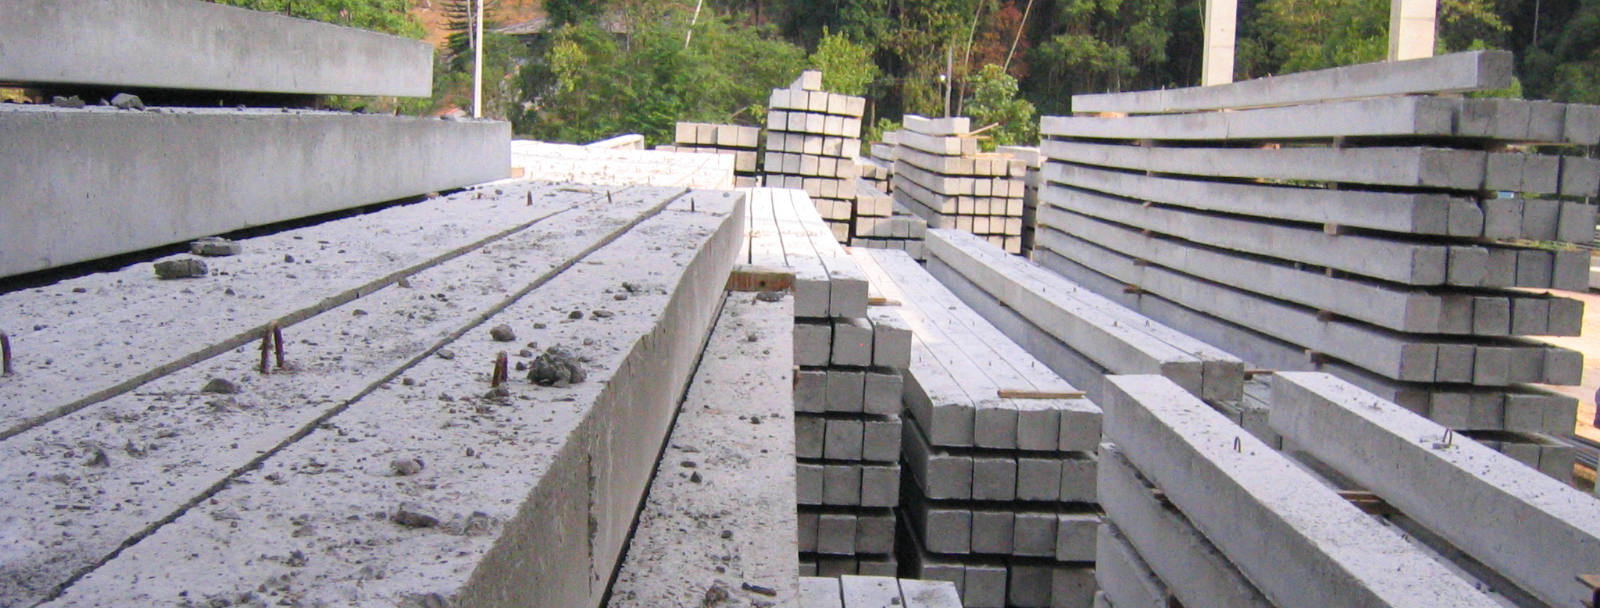 estruturas-pre-fabricadas-moldadas-obra-construcao-concreto-ferro-aco